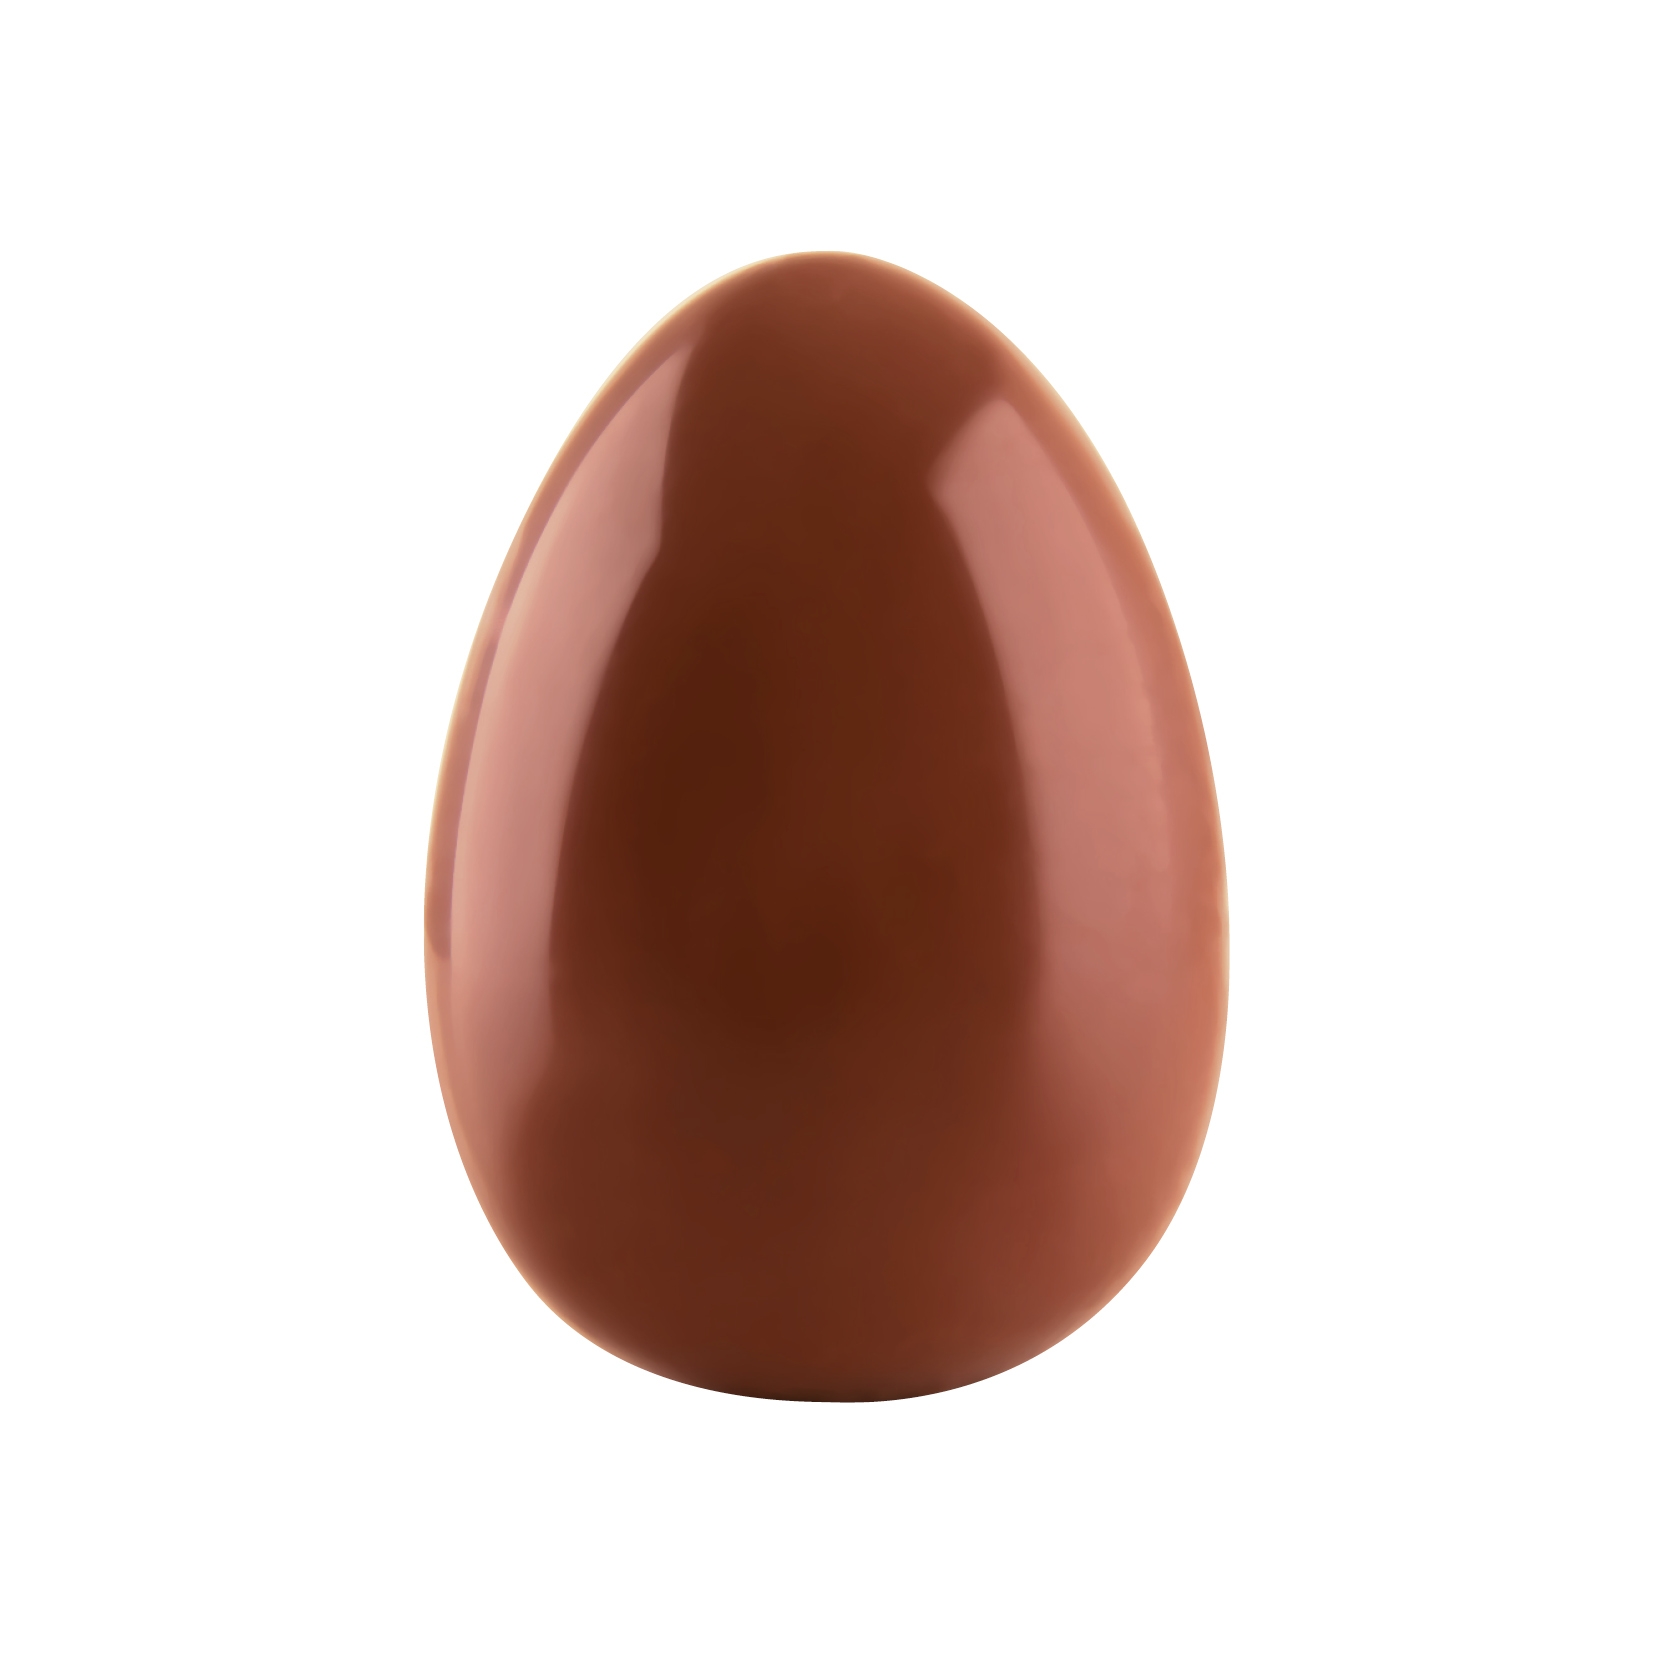 Форма для шоколада «Яйцо» поликарбонатная 20U105N, 4 ячейки, 10,5х7,2 см, Martellato, Италия  | Фото — Магазин Andy Chef  1